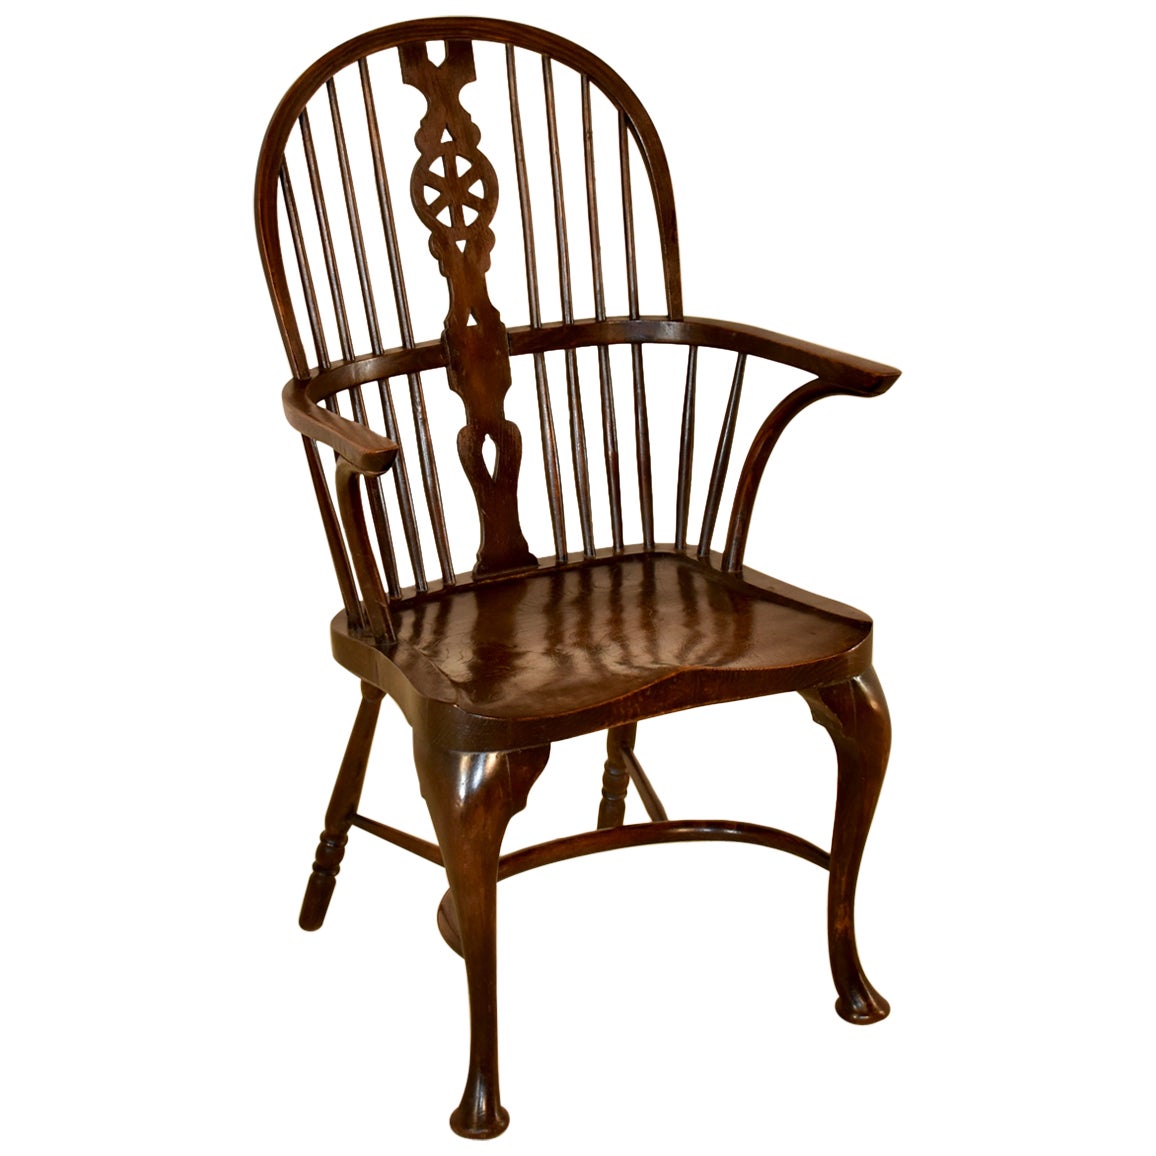 Circa 1900 English Double Bow Windsor Chair